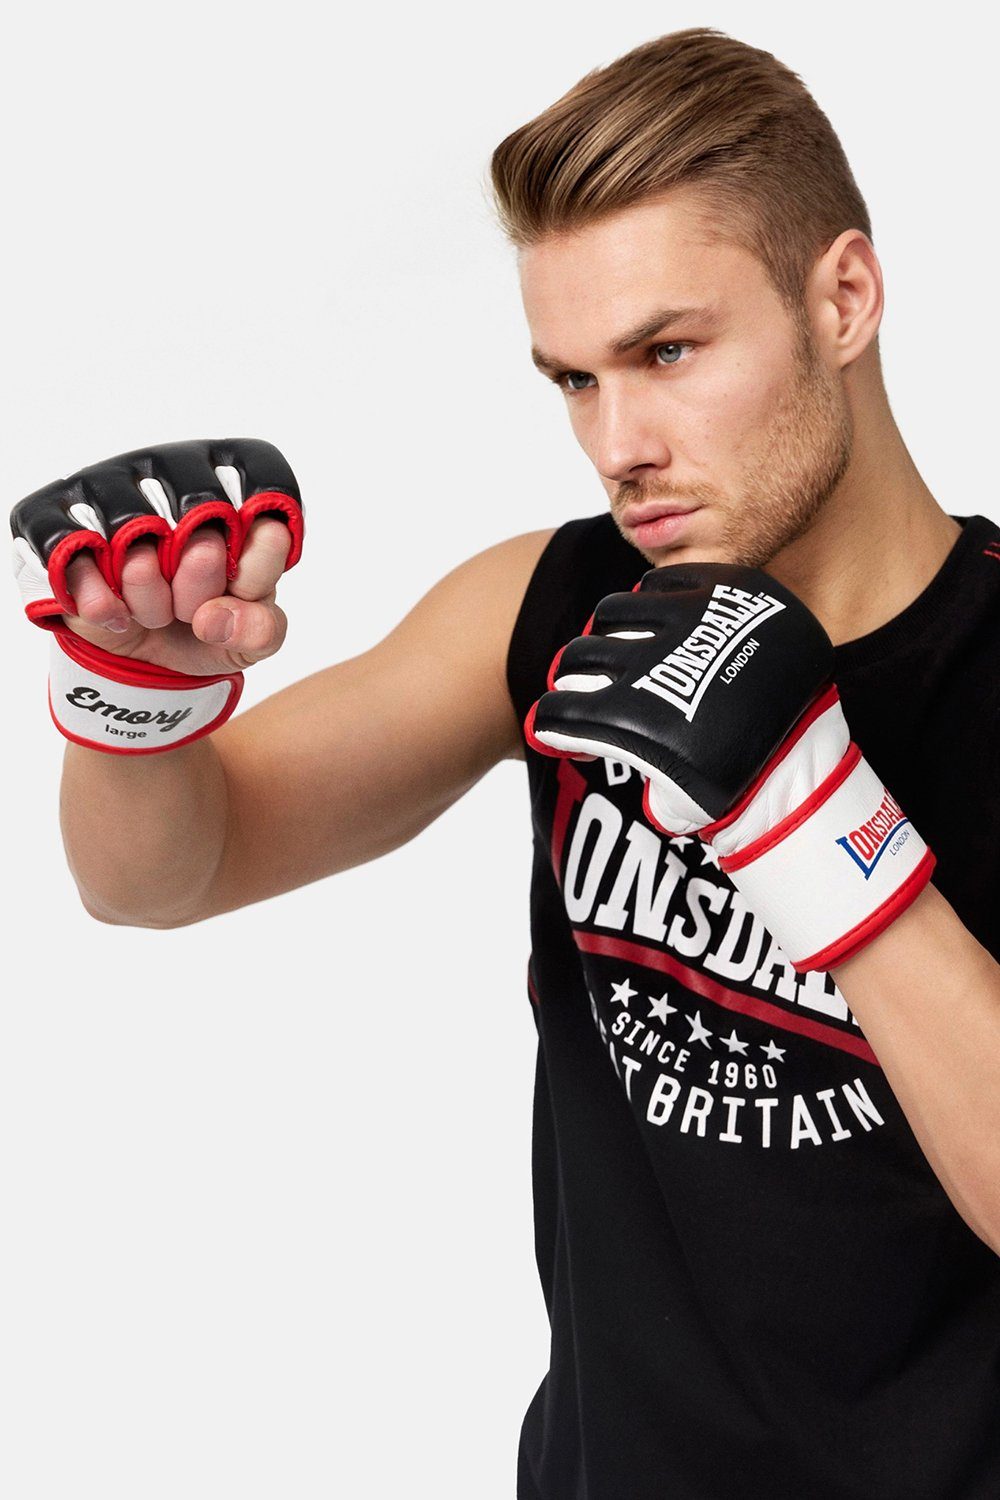 EMORY MMA-Handschuhe Lonsdale